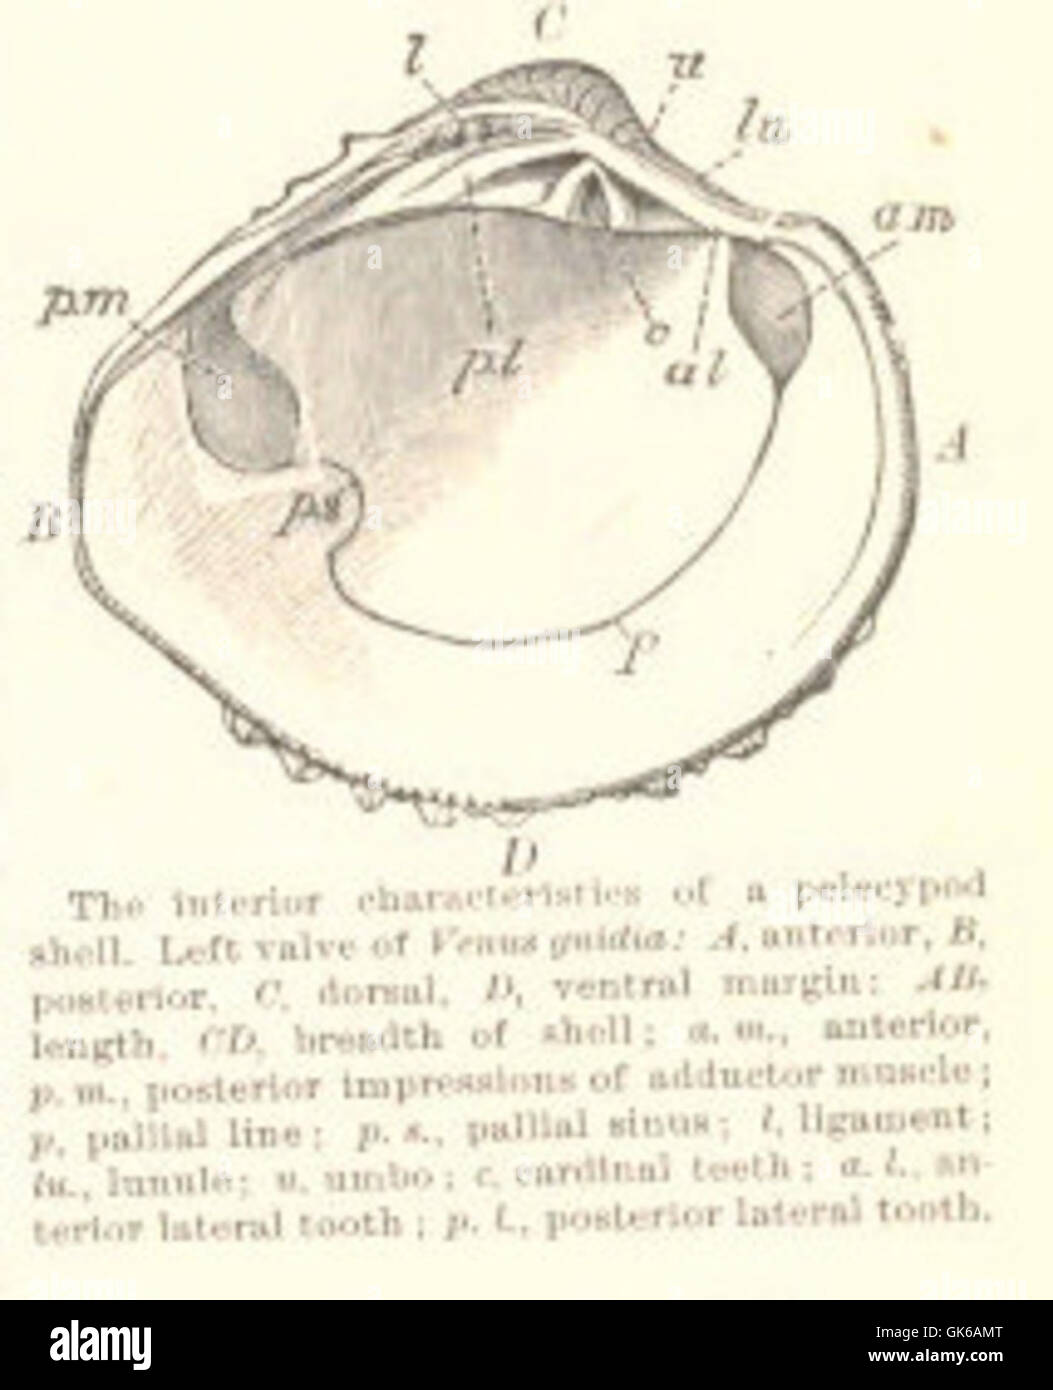 52883 The interior characteristics of a pelcoypod shell Left valve of Vesus gnidia- A, anterior; B, posterior; C, dorsal; D, ventral Stock Photo